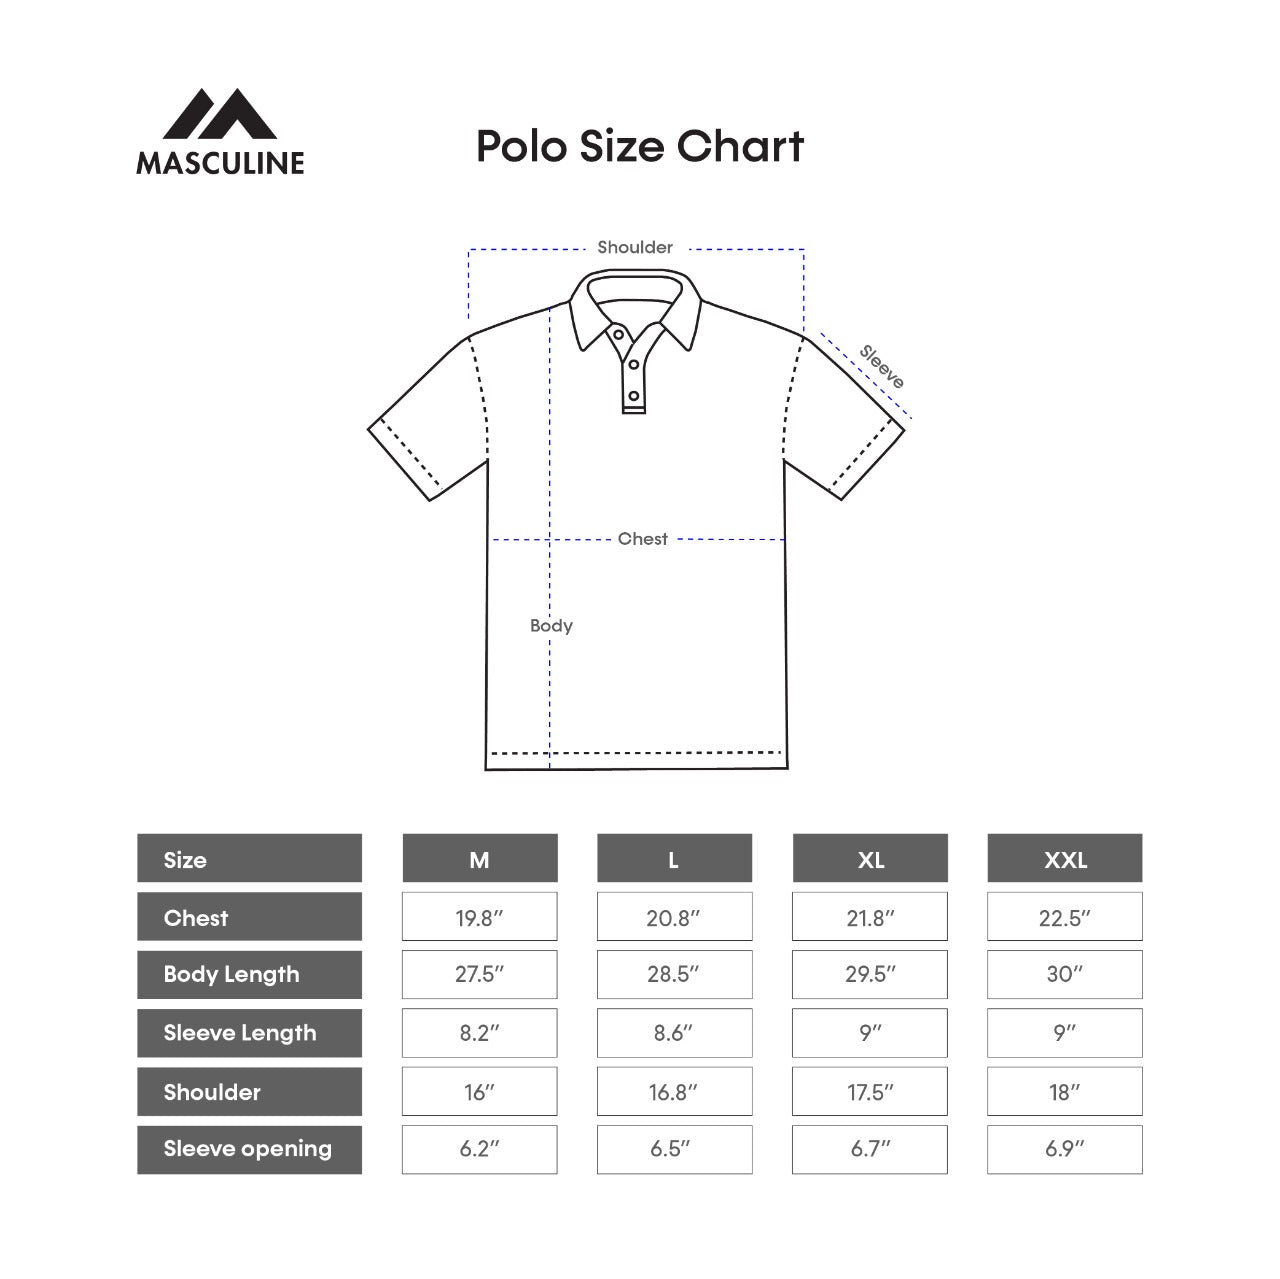 Stripe Polo Shirt - Cream & Black